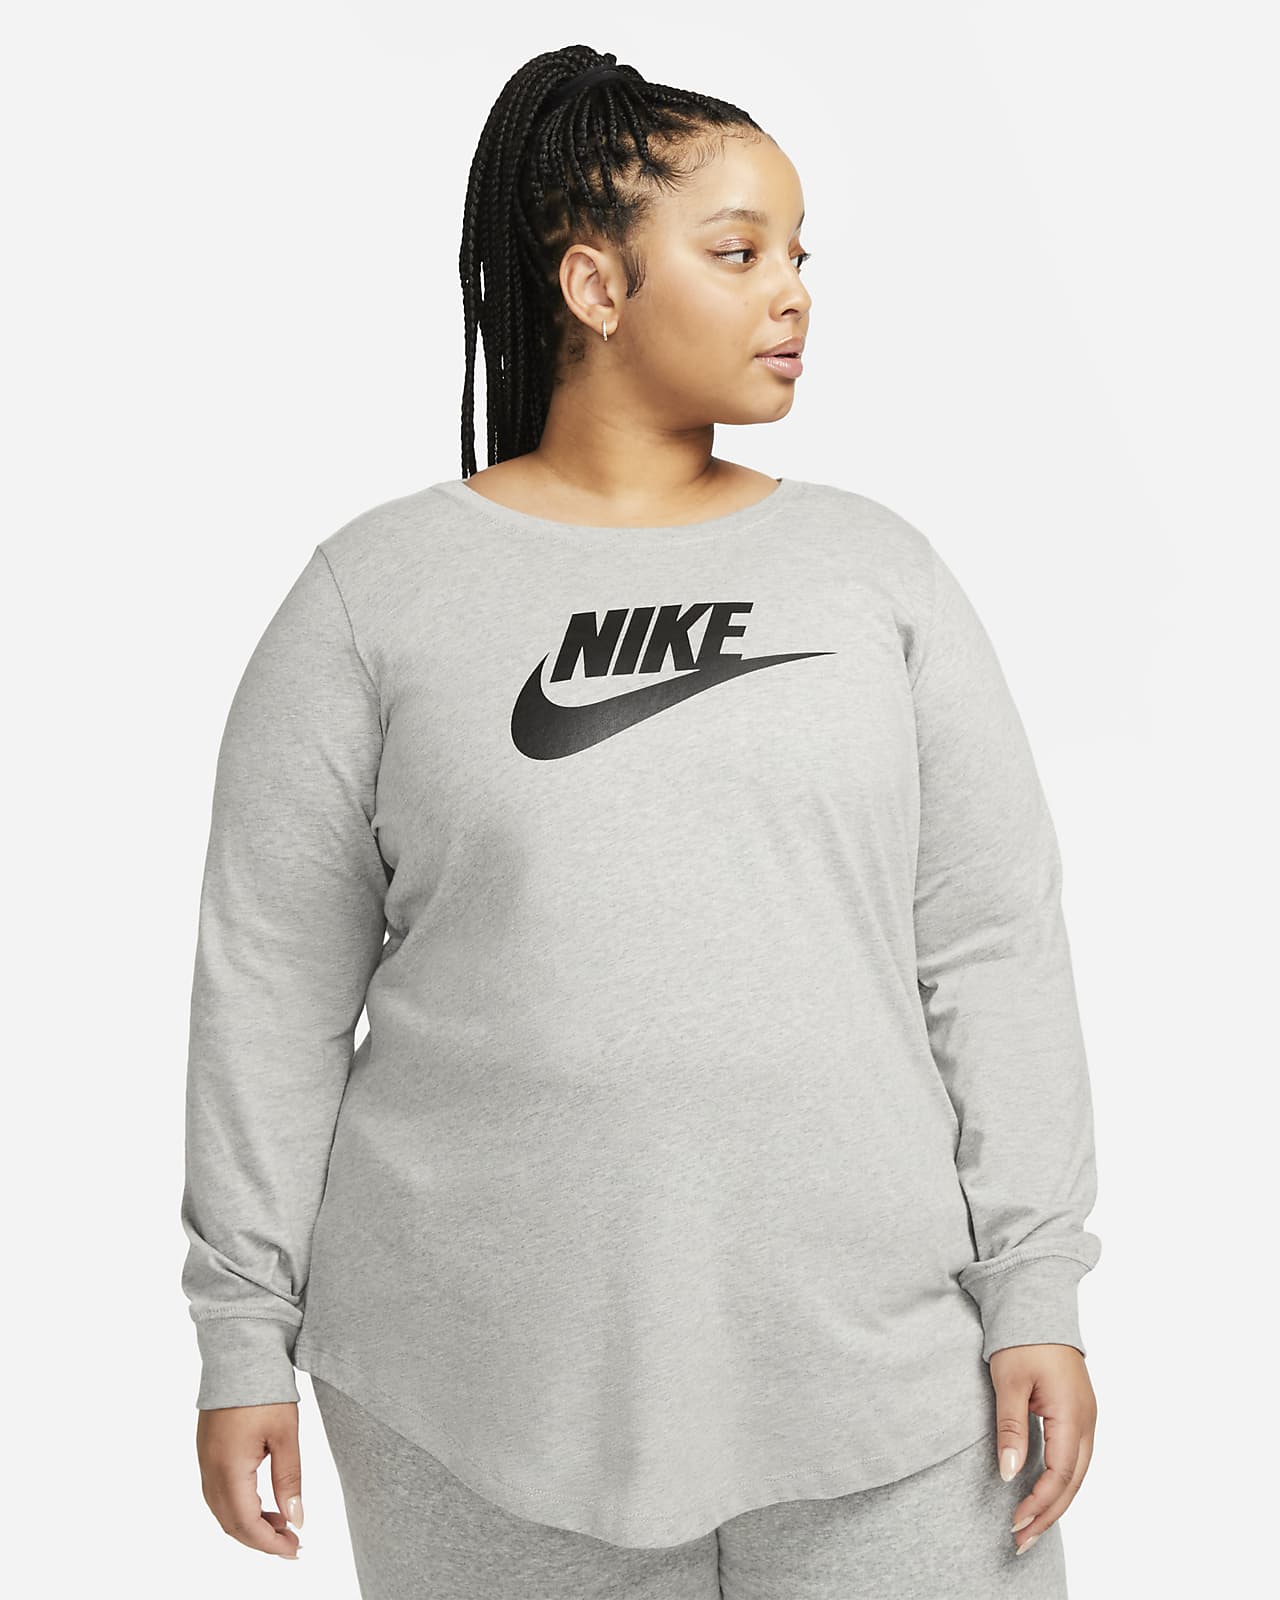 Nike Womens Long Sleeve Athletic T Shirt Pullover Leggings Size